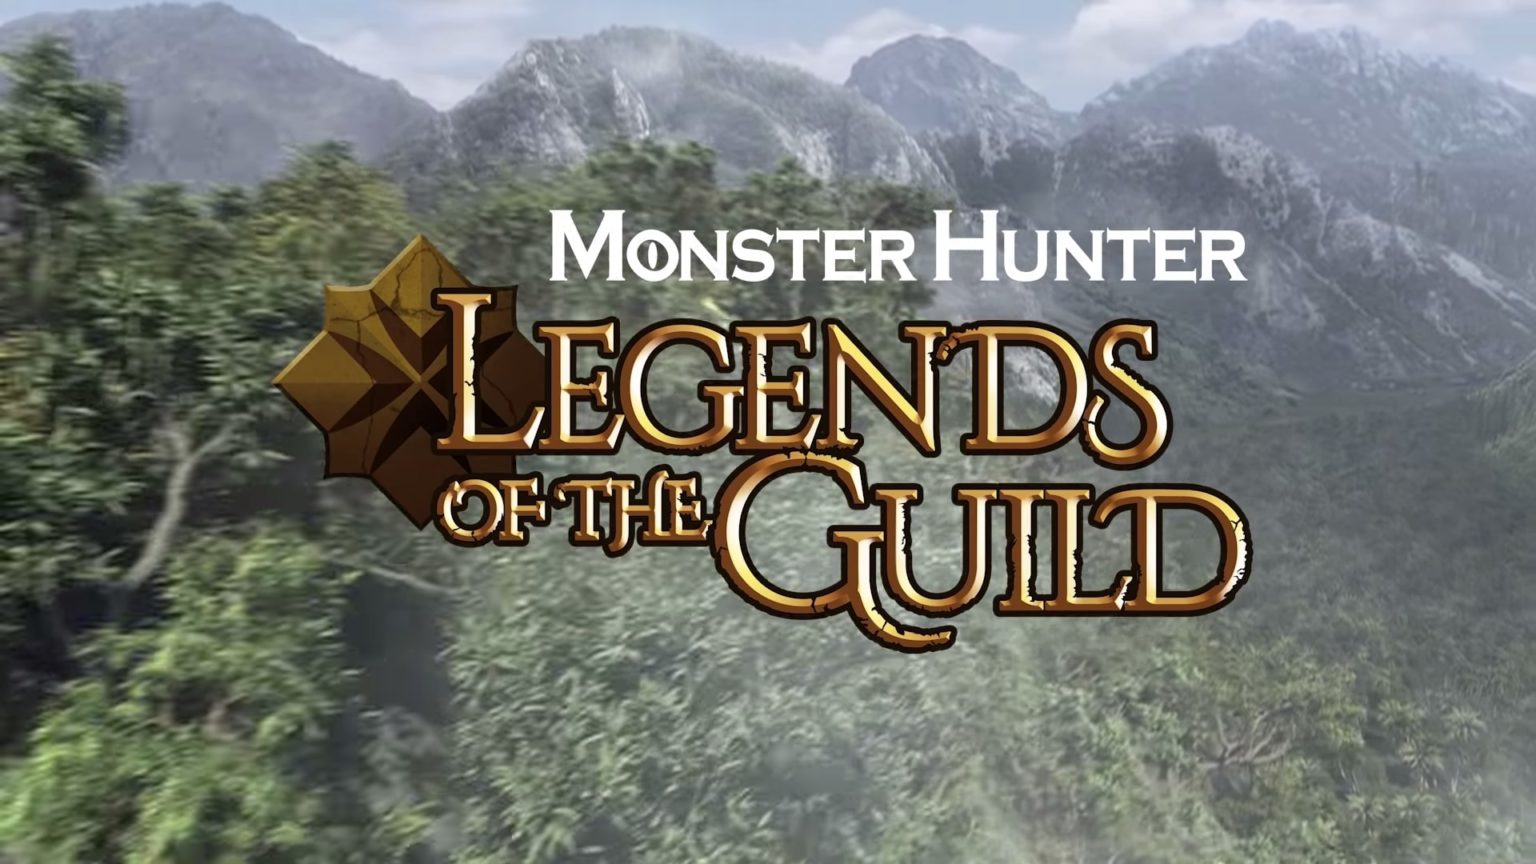 monster hunter: legends of the guild review